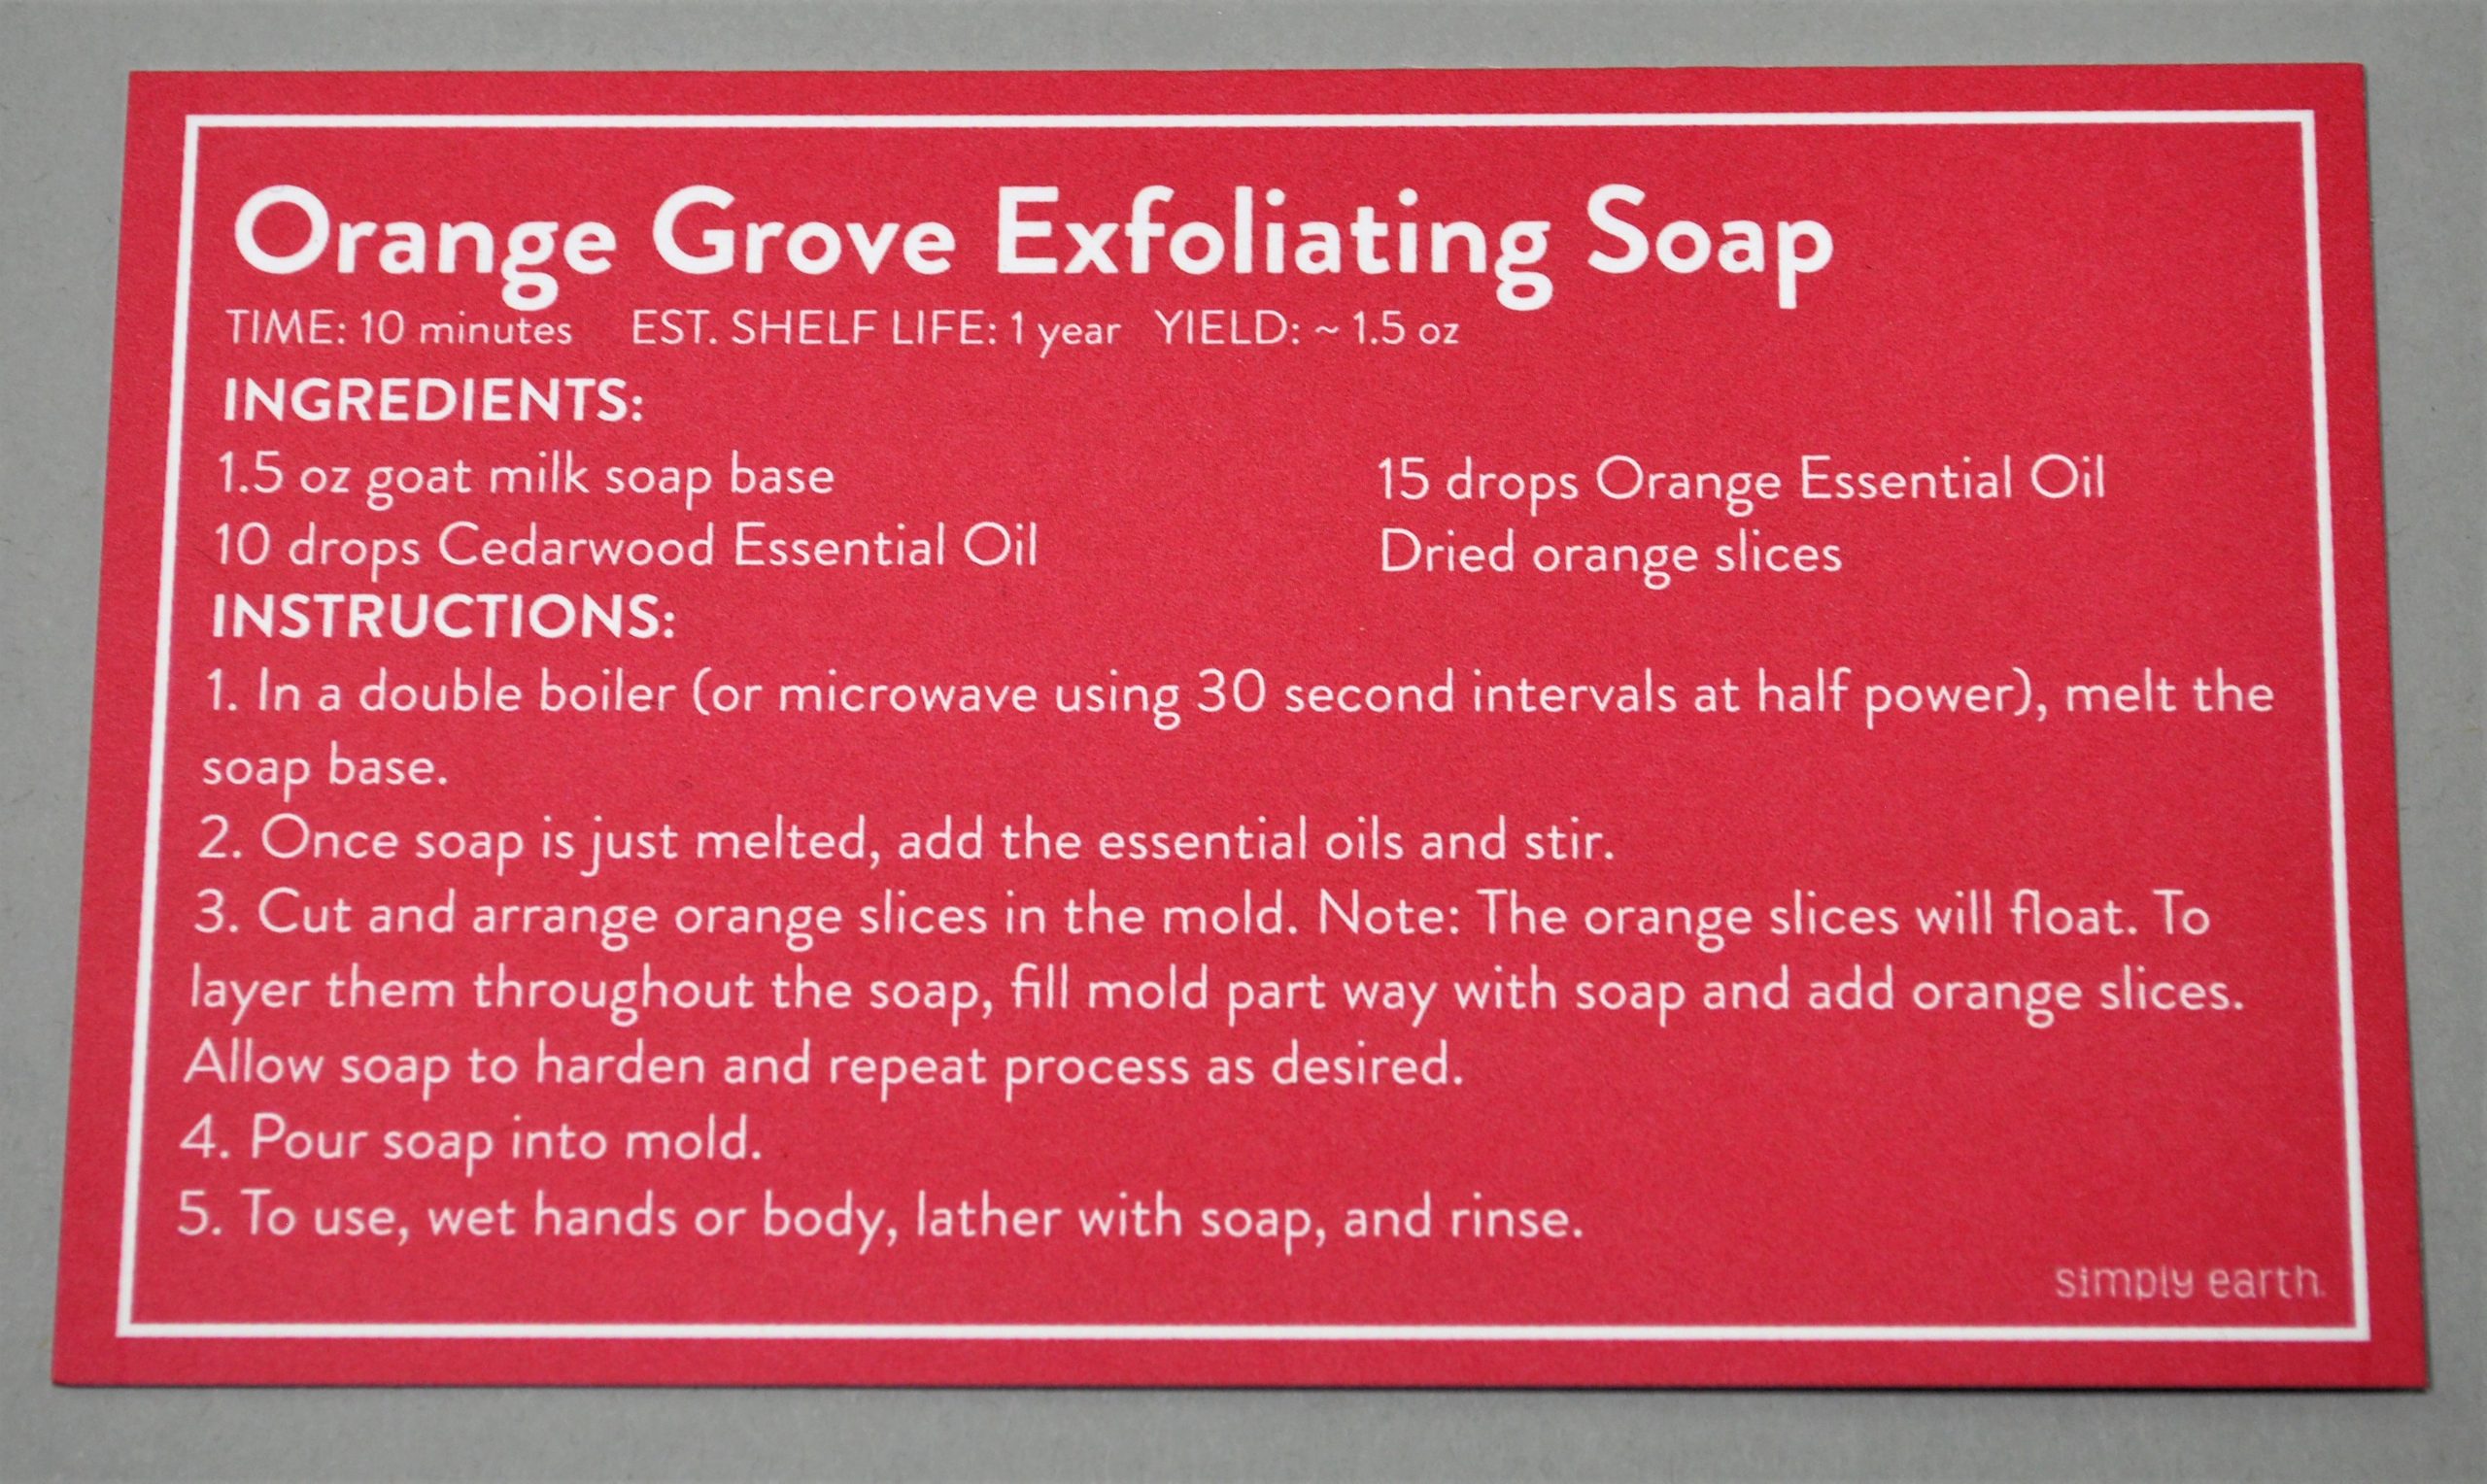 Simply Earth Orange Grove Exfoliating Soap Recipe Card December 2020